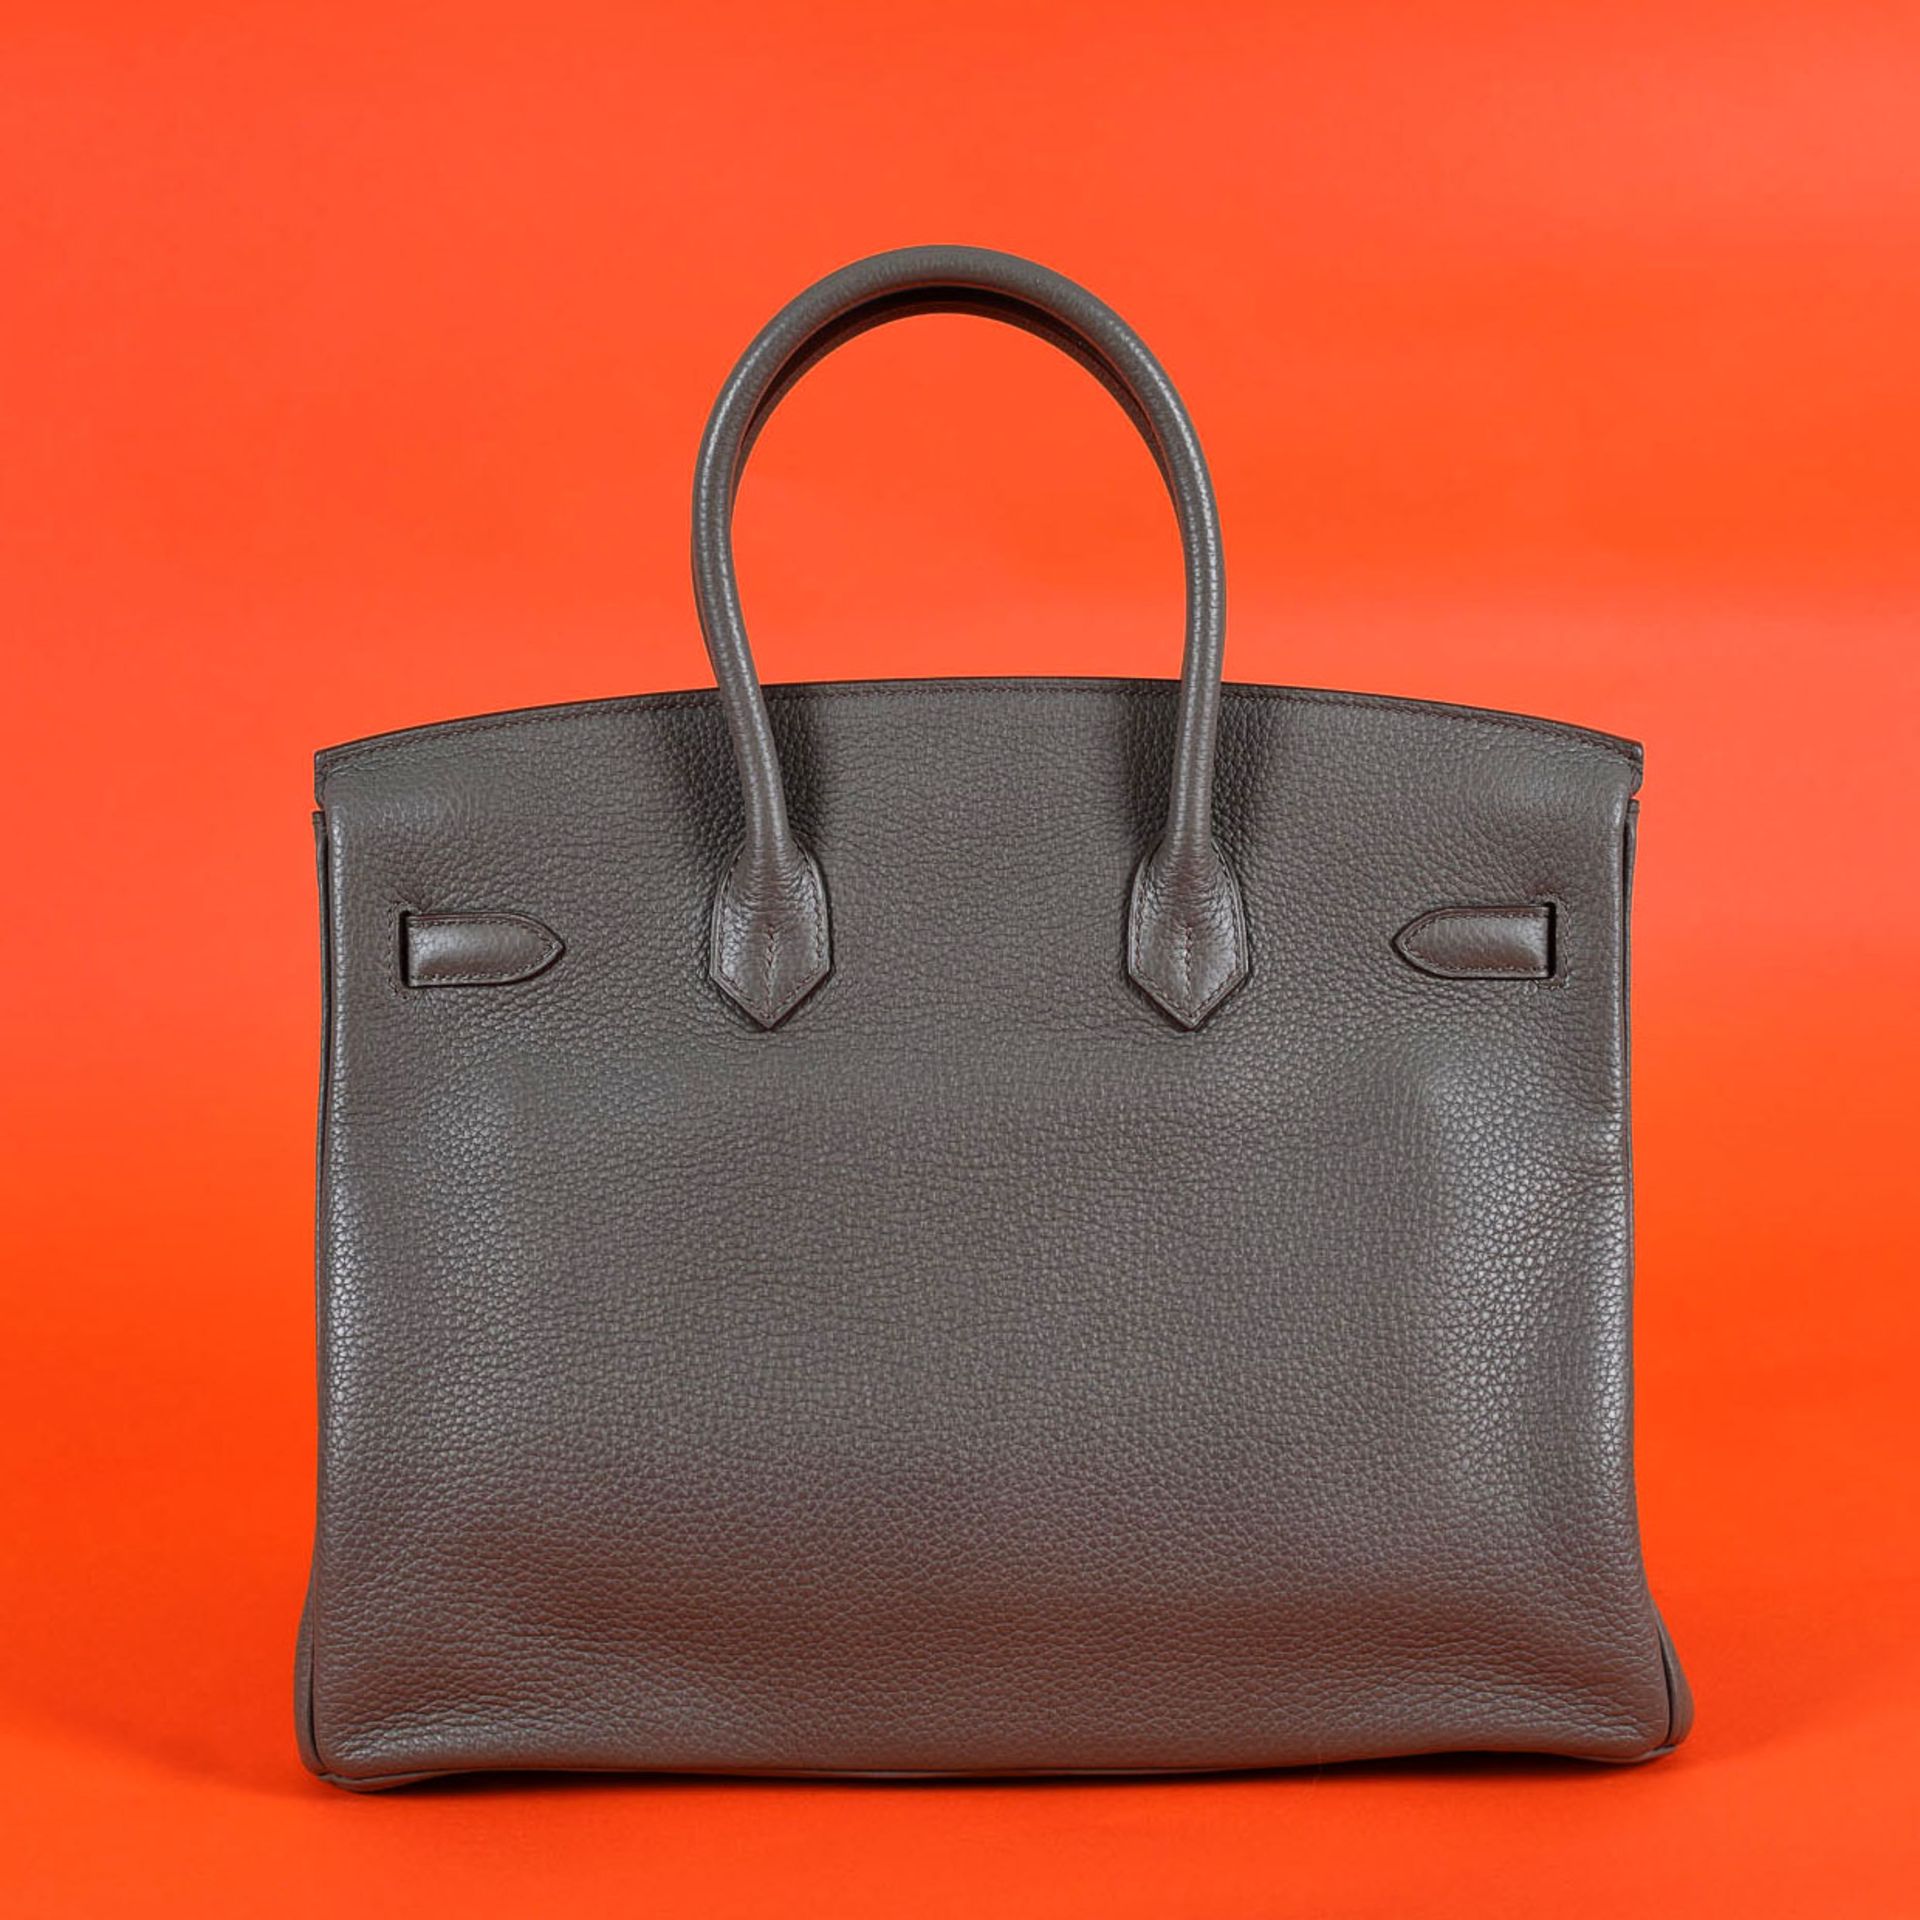 "Birkin 35" - Hermès bag, Clemence leather, colour Etain, for women, accompanied by original box - Image 3 of 8